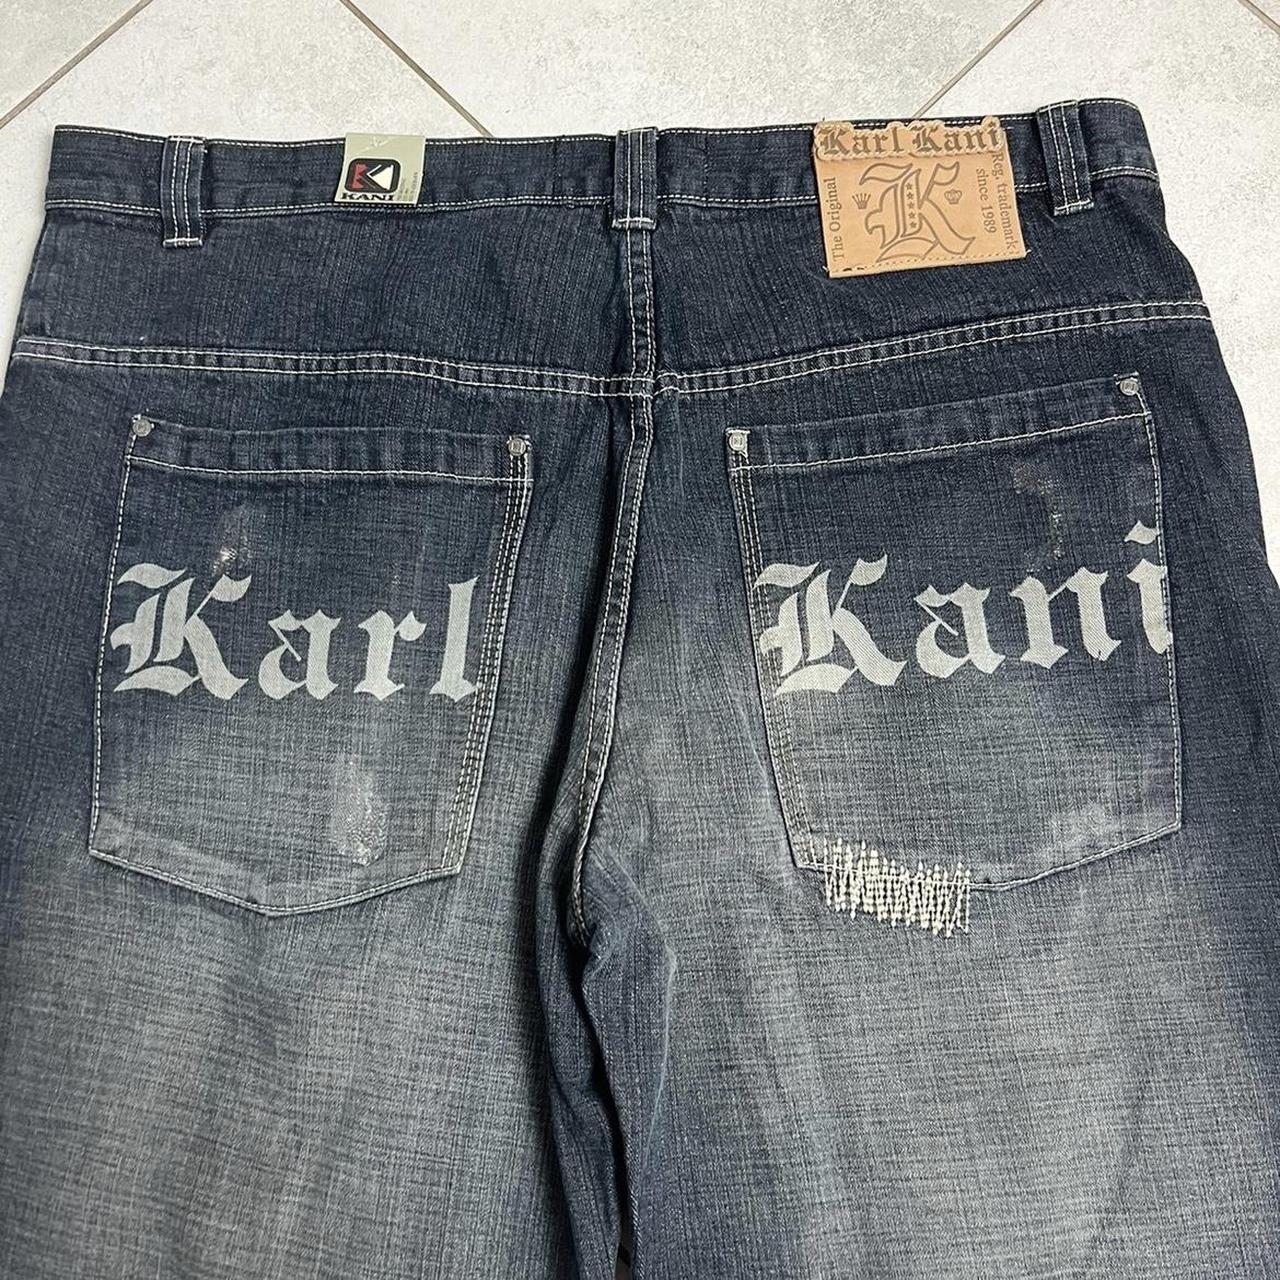 Karl Kani Men's Blue Jeans (4)